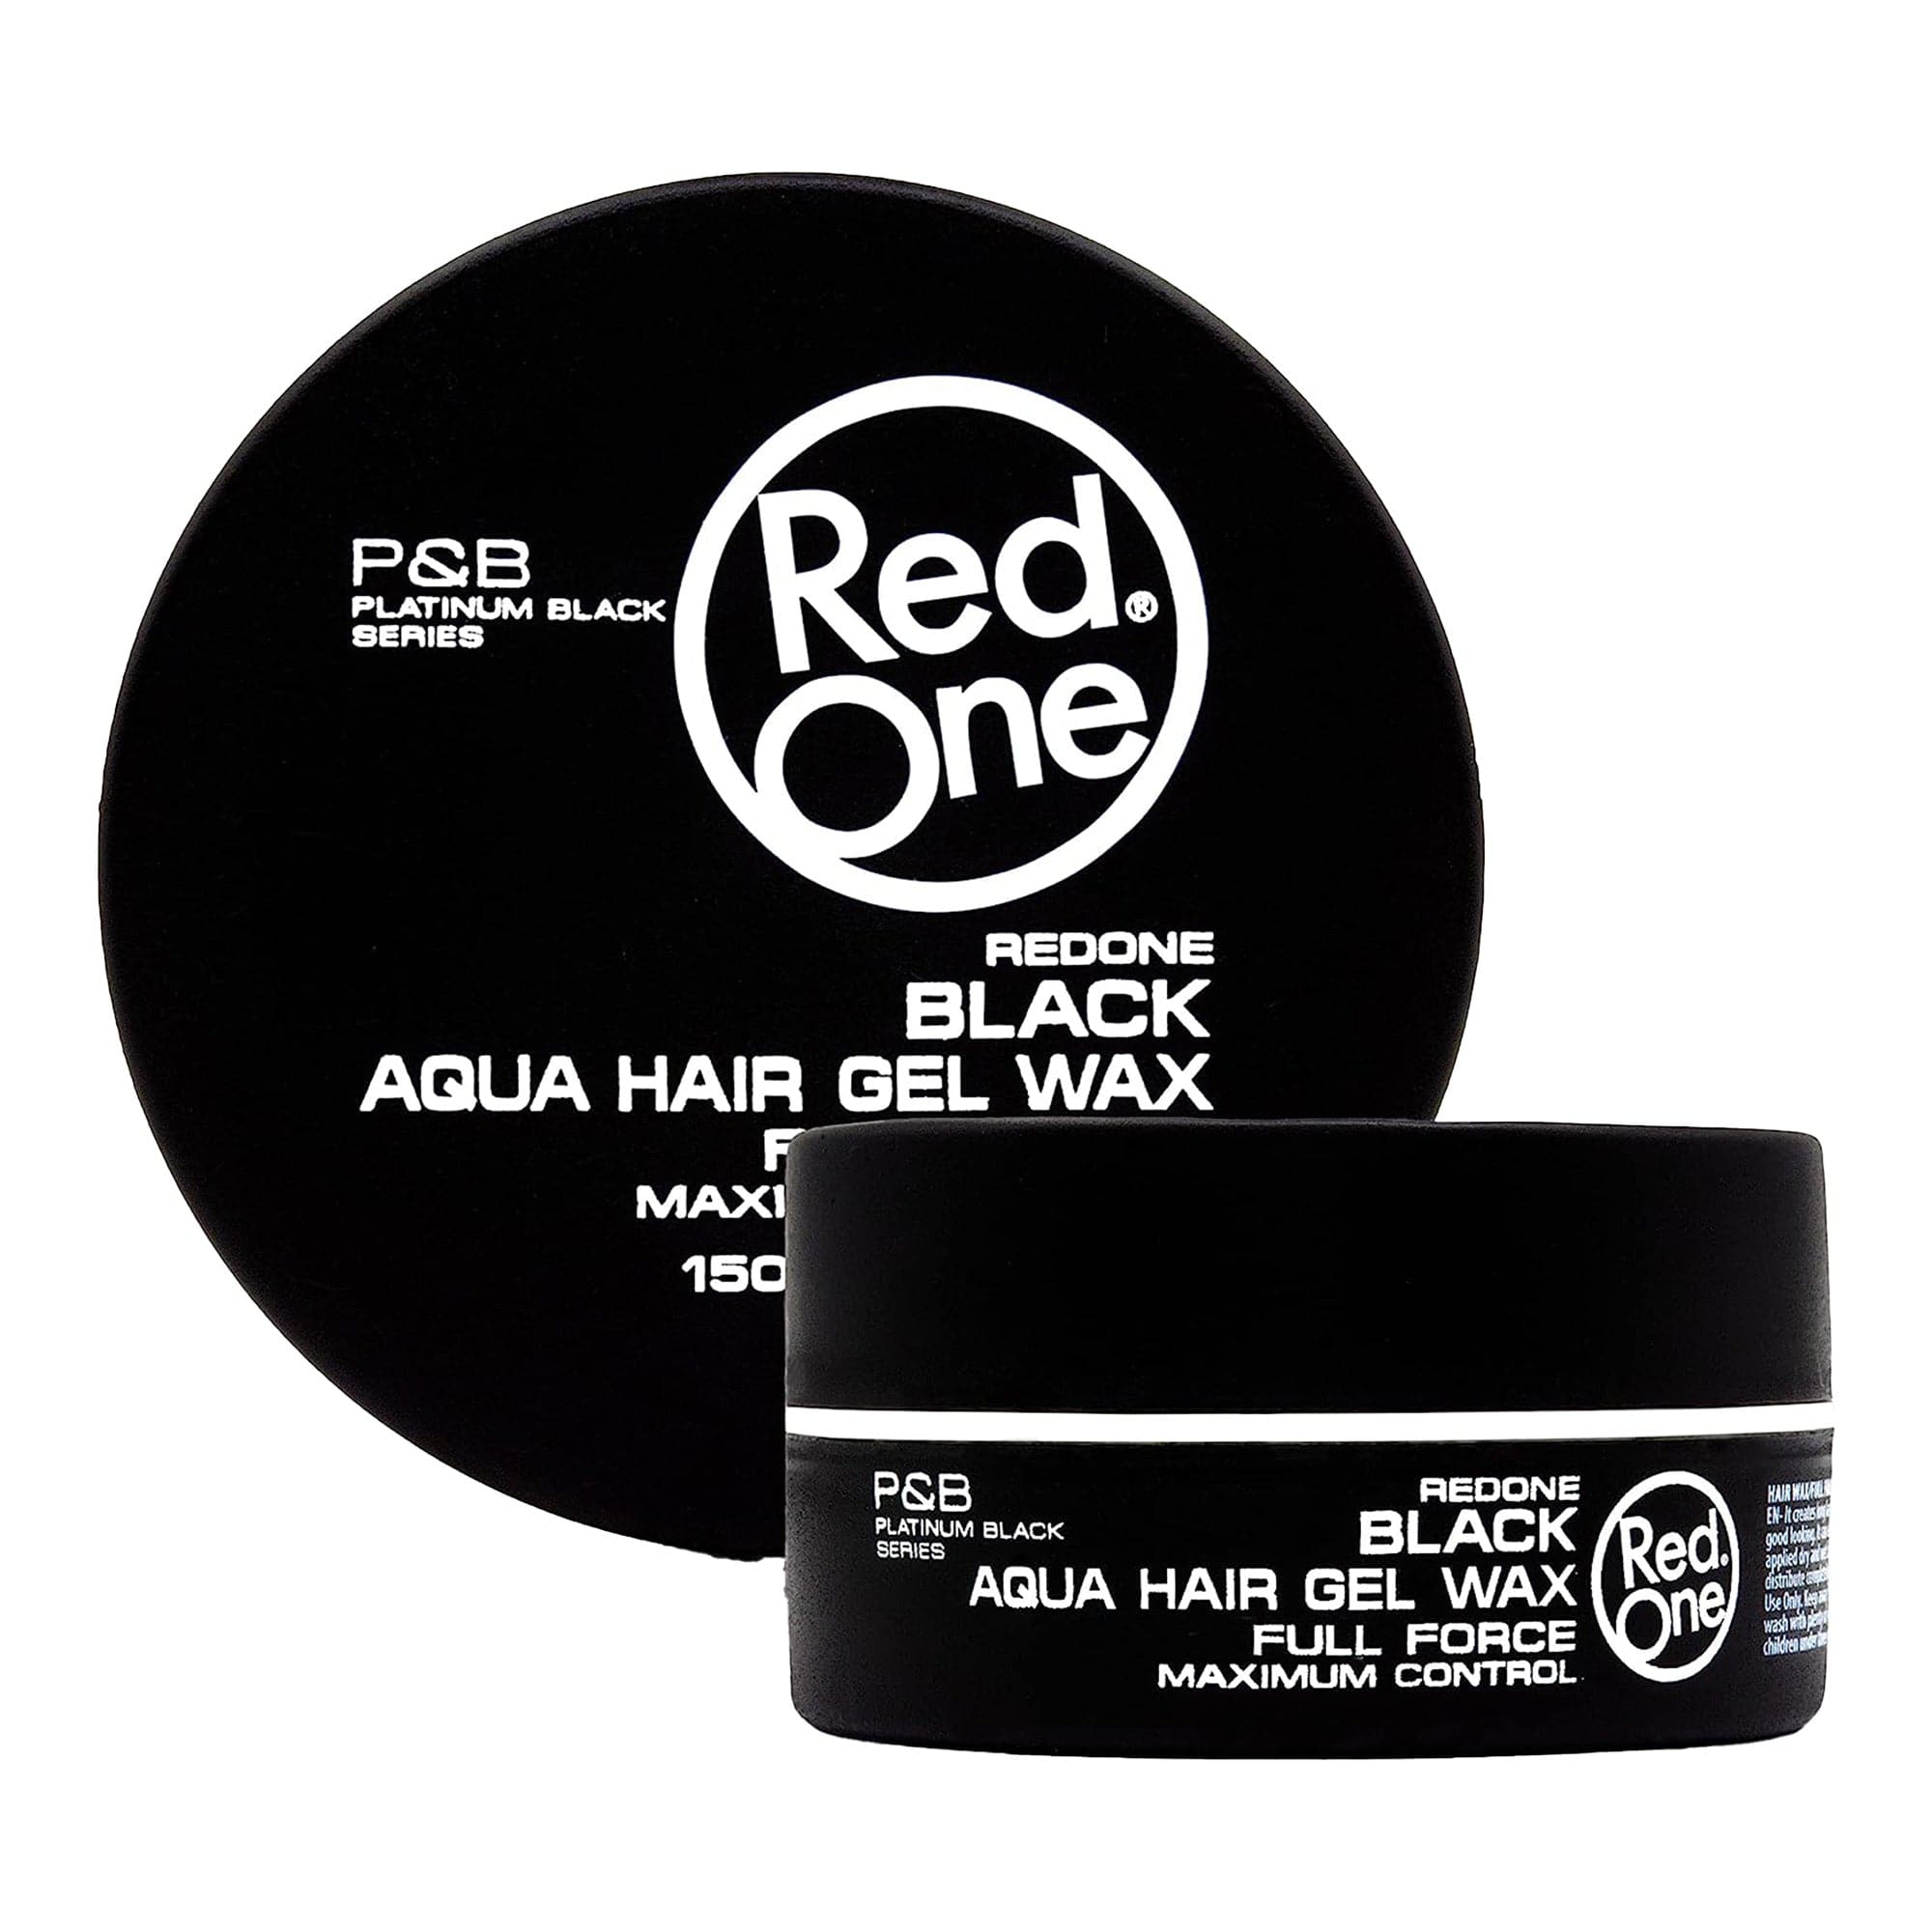 Redone - Aqua Hair Gel Wax Black Full Force Maximum Control 150ml